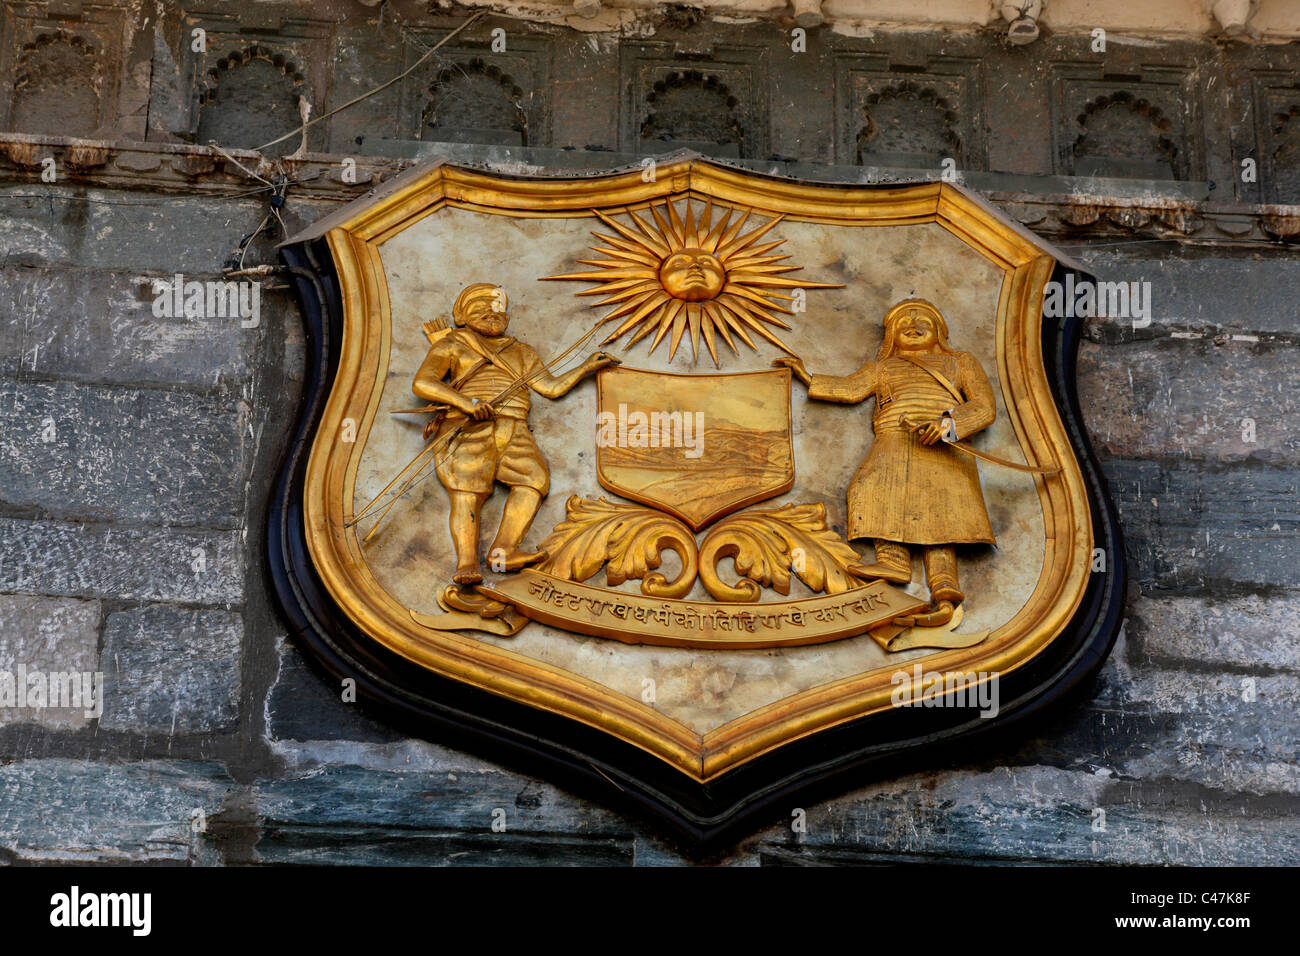 Emblème de Mewar dynastie d'Udaipur, Rajasthan, Inde Banque D'Images